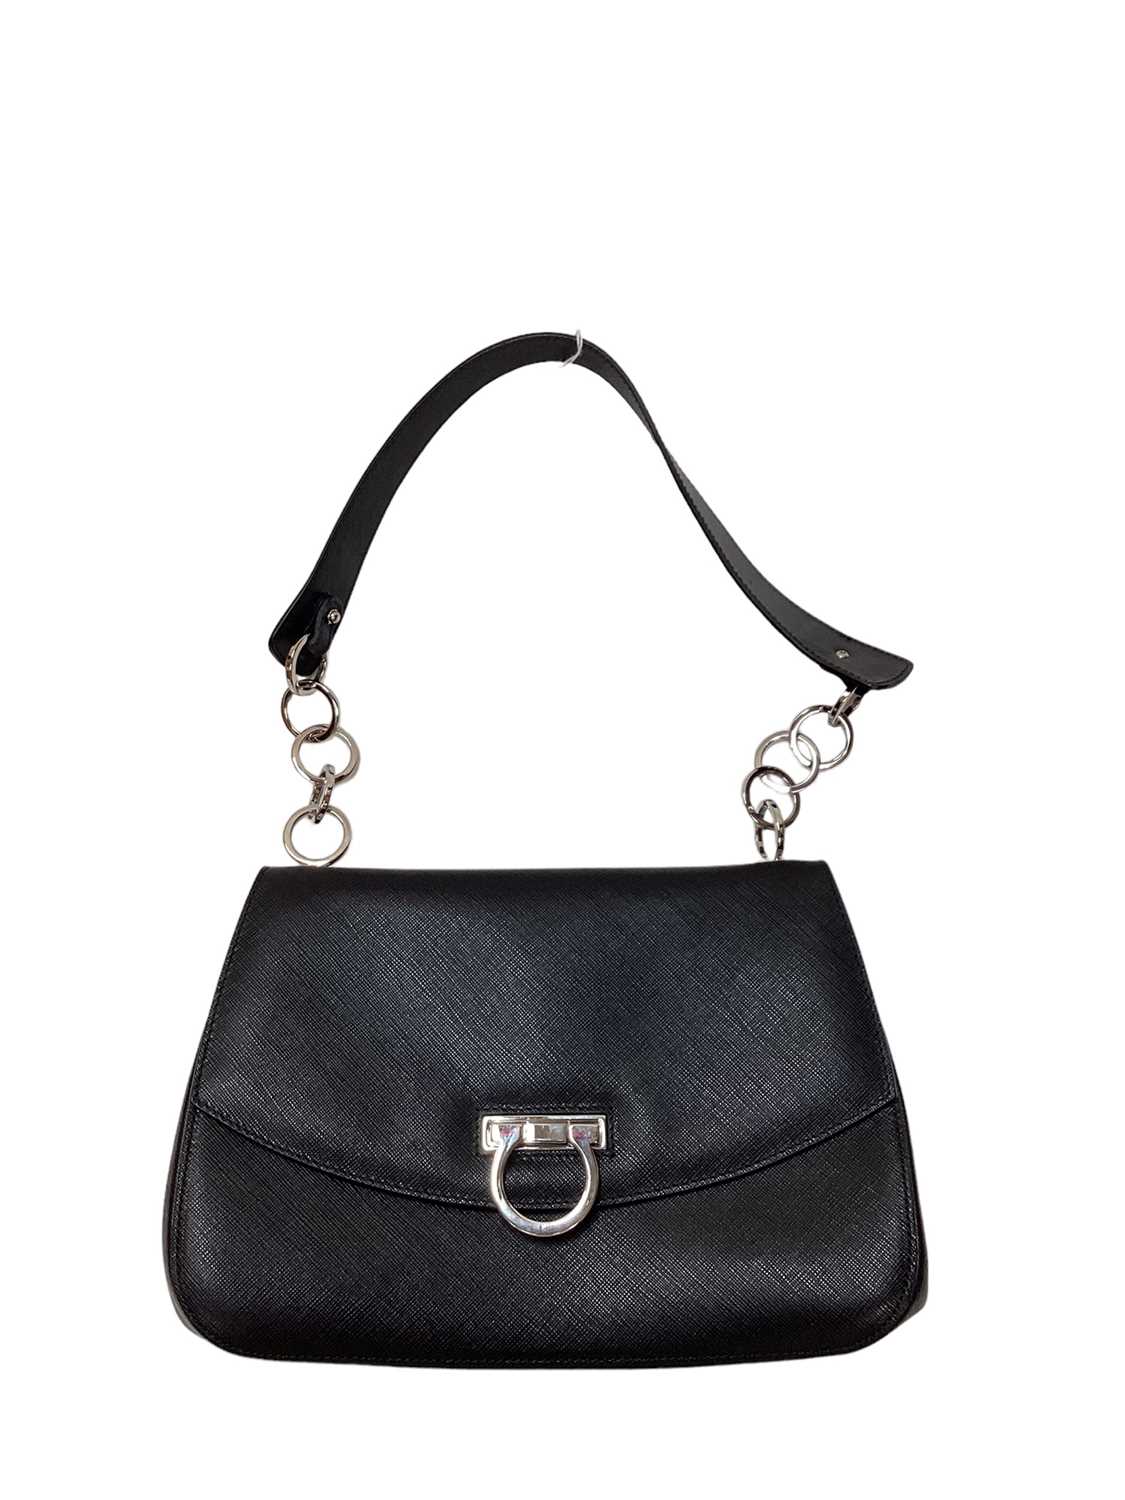 Lot 2088 - Salvatore Ferragamo black leather handbag